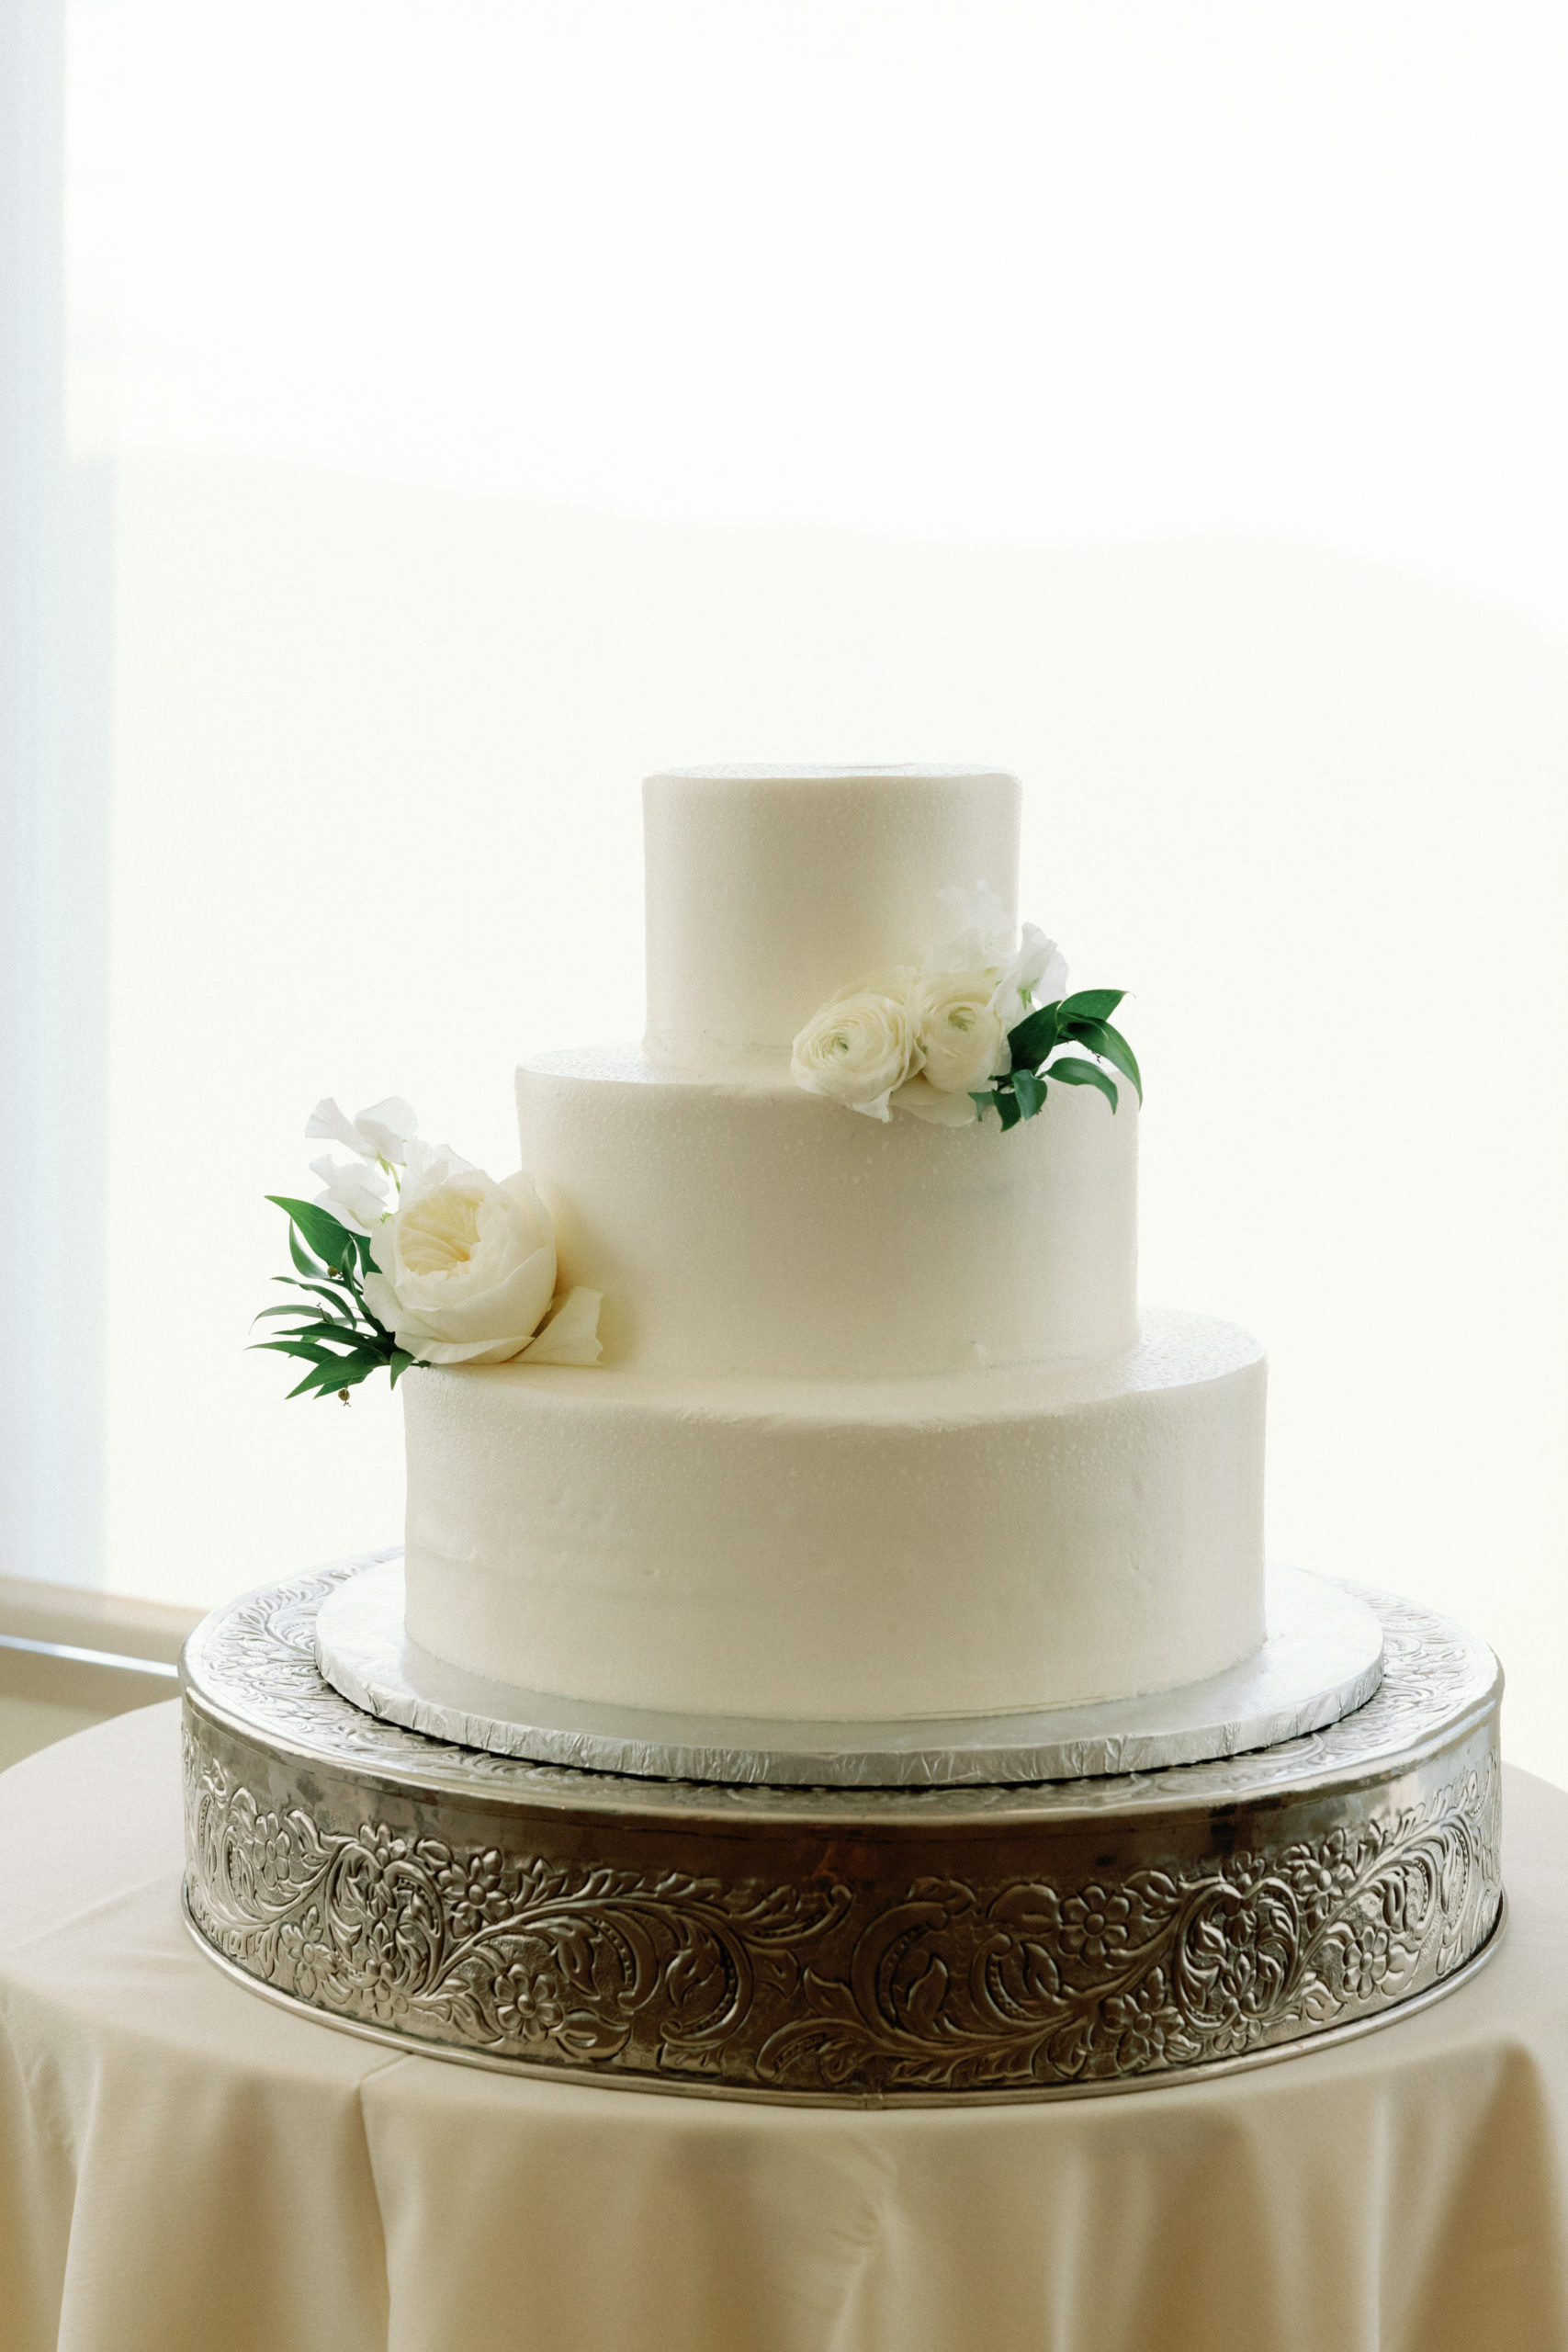 A simple, elegant wedding cake by Pastry Garden. Luxury wedding cake image by Jenny Fu Studio NYC